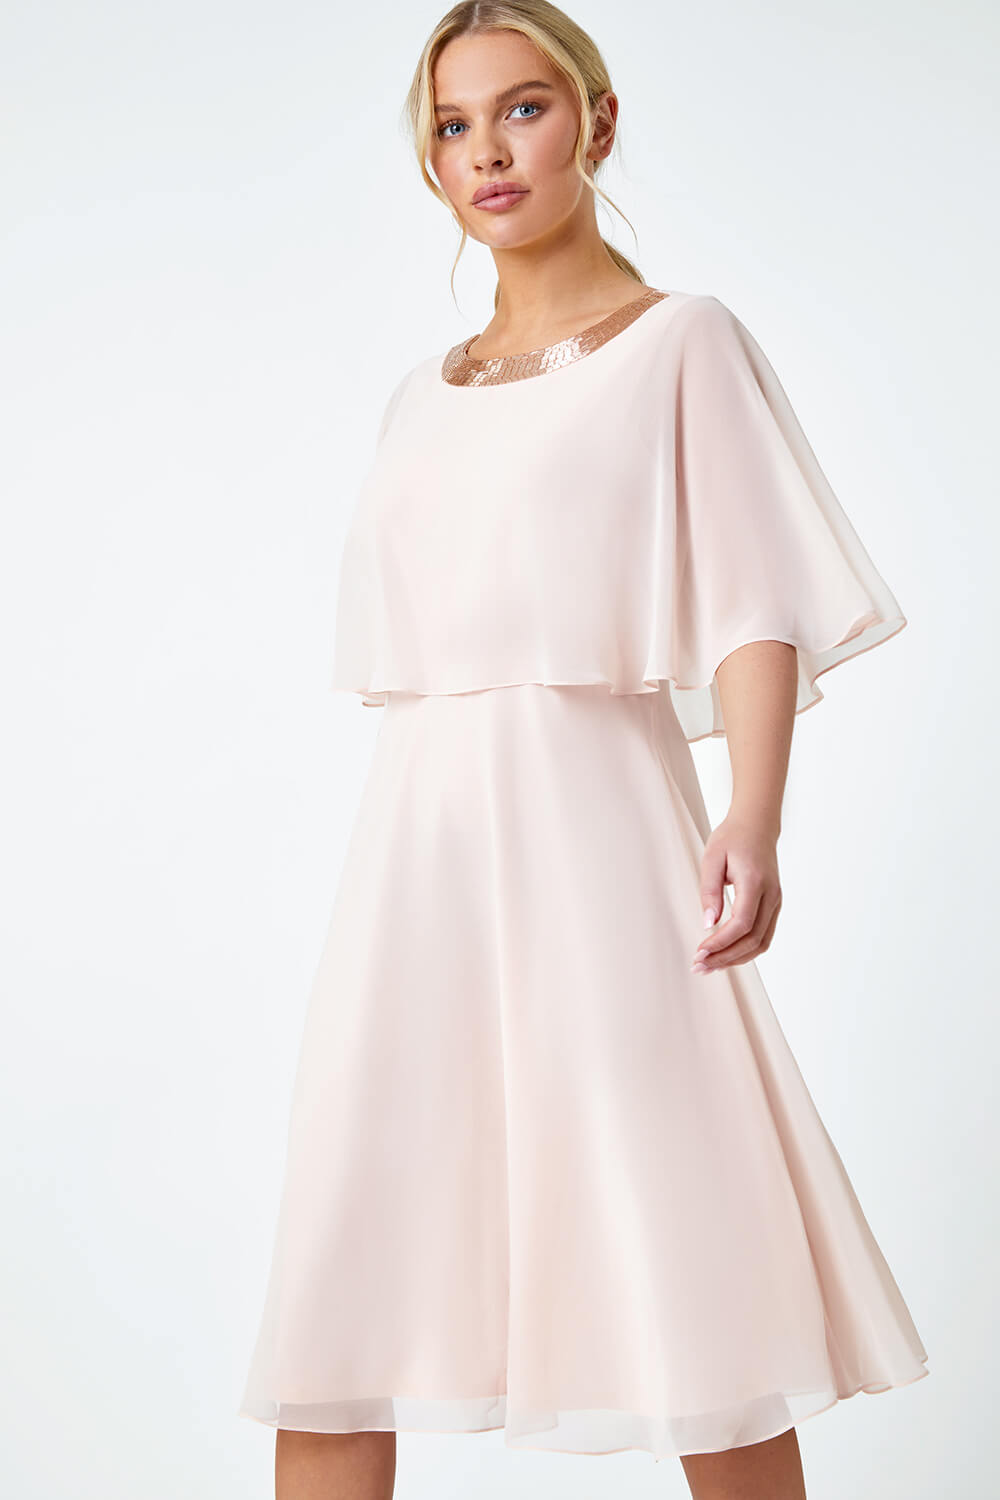 Light Pink Petite Sequin Trim Chiffon Cape Dress, Image 2 of 5